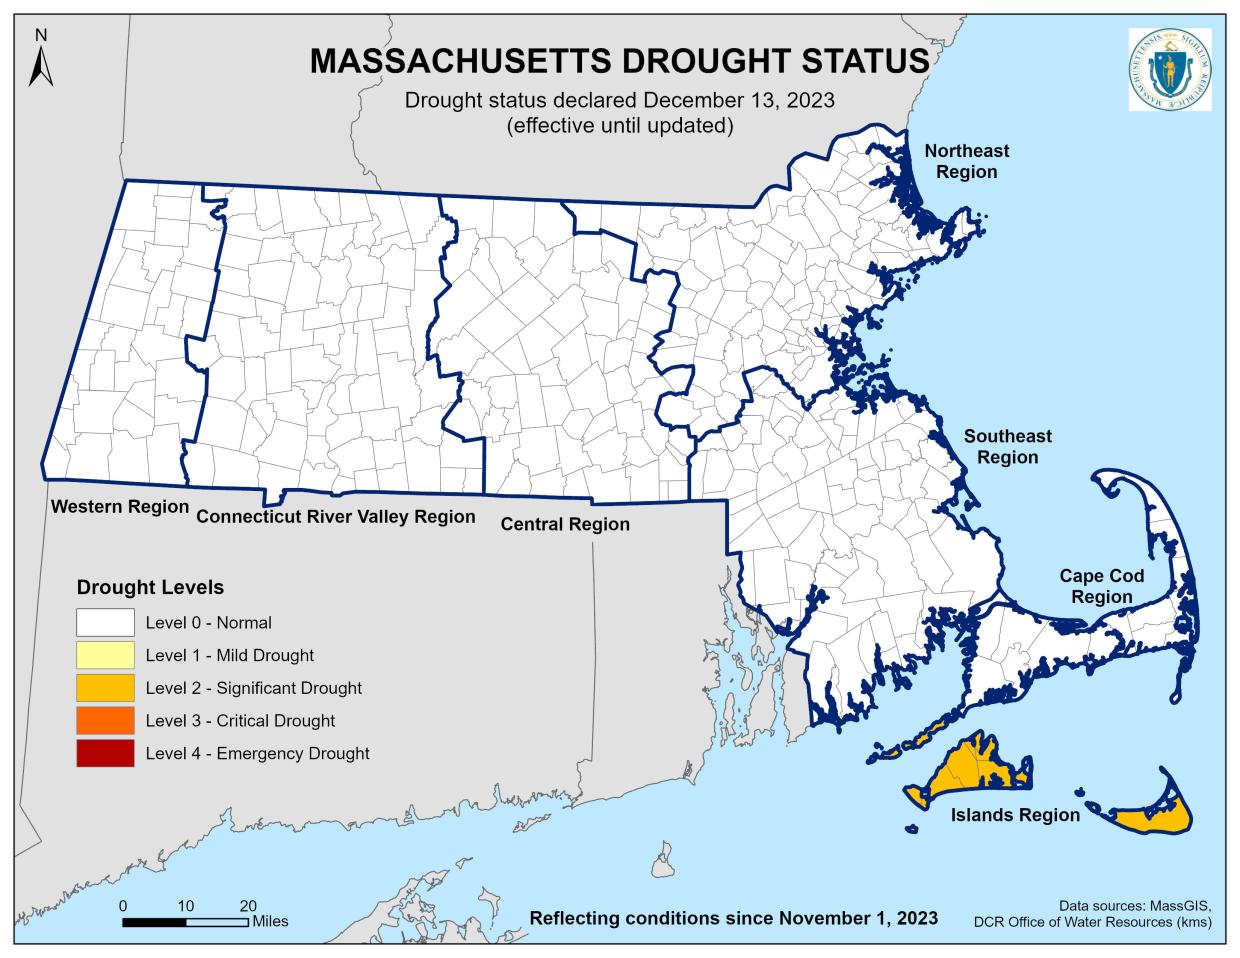 Drought status declared December 13, 2023. (effective until updated)